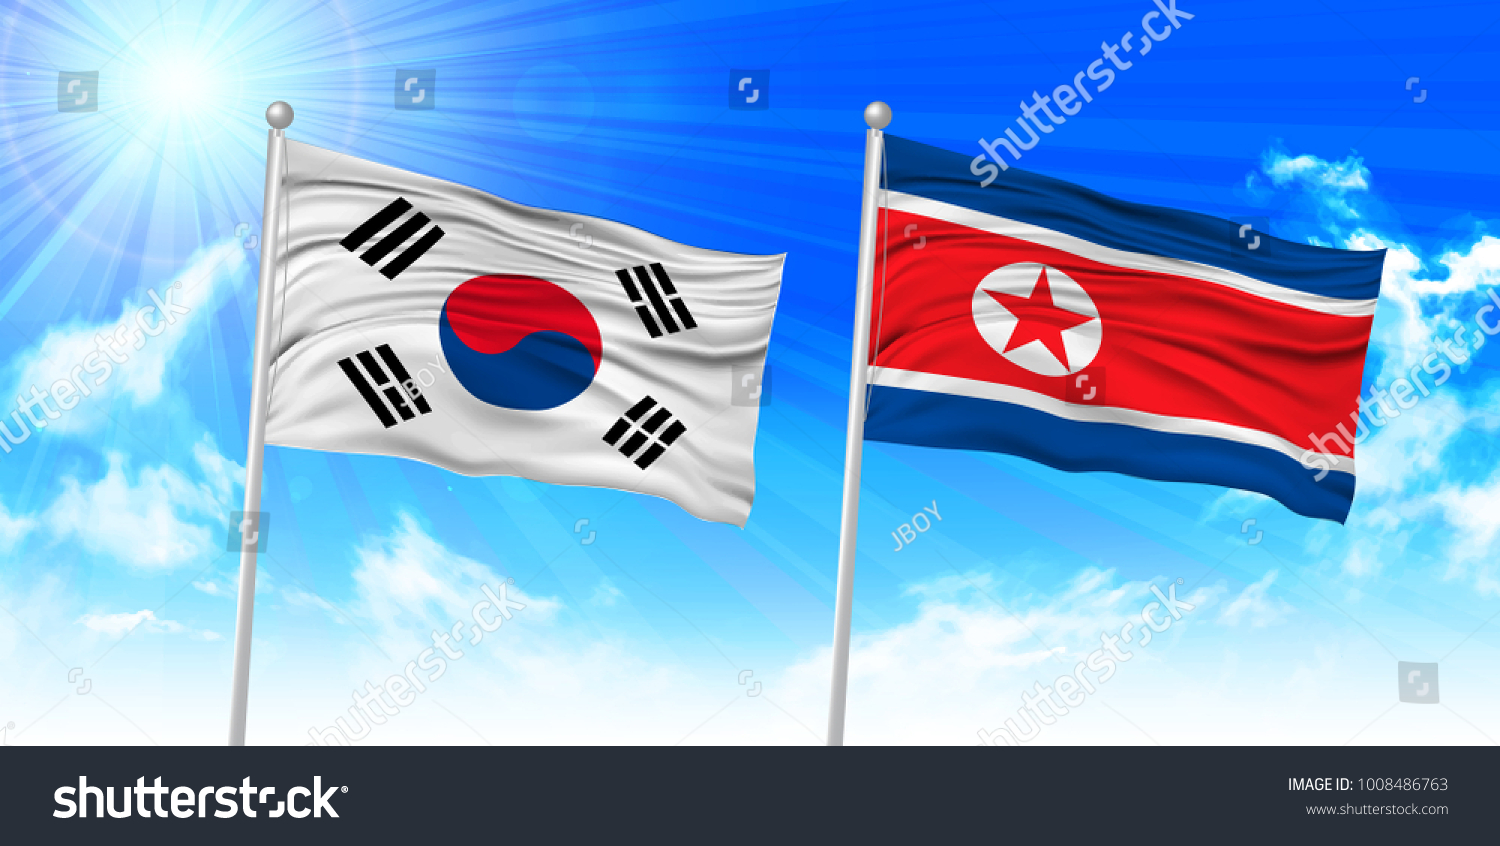 north korean flag wallpaper